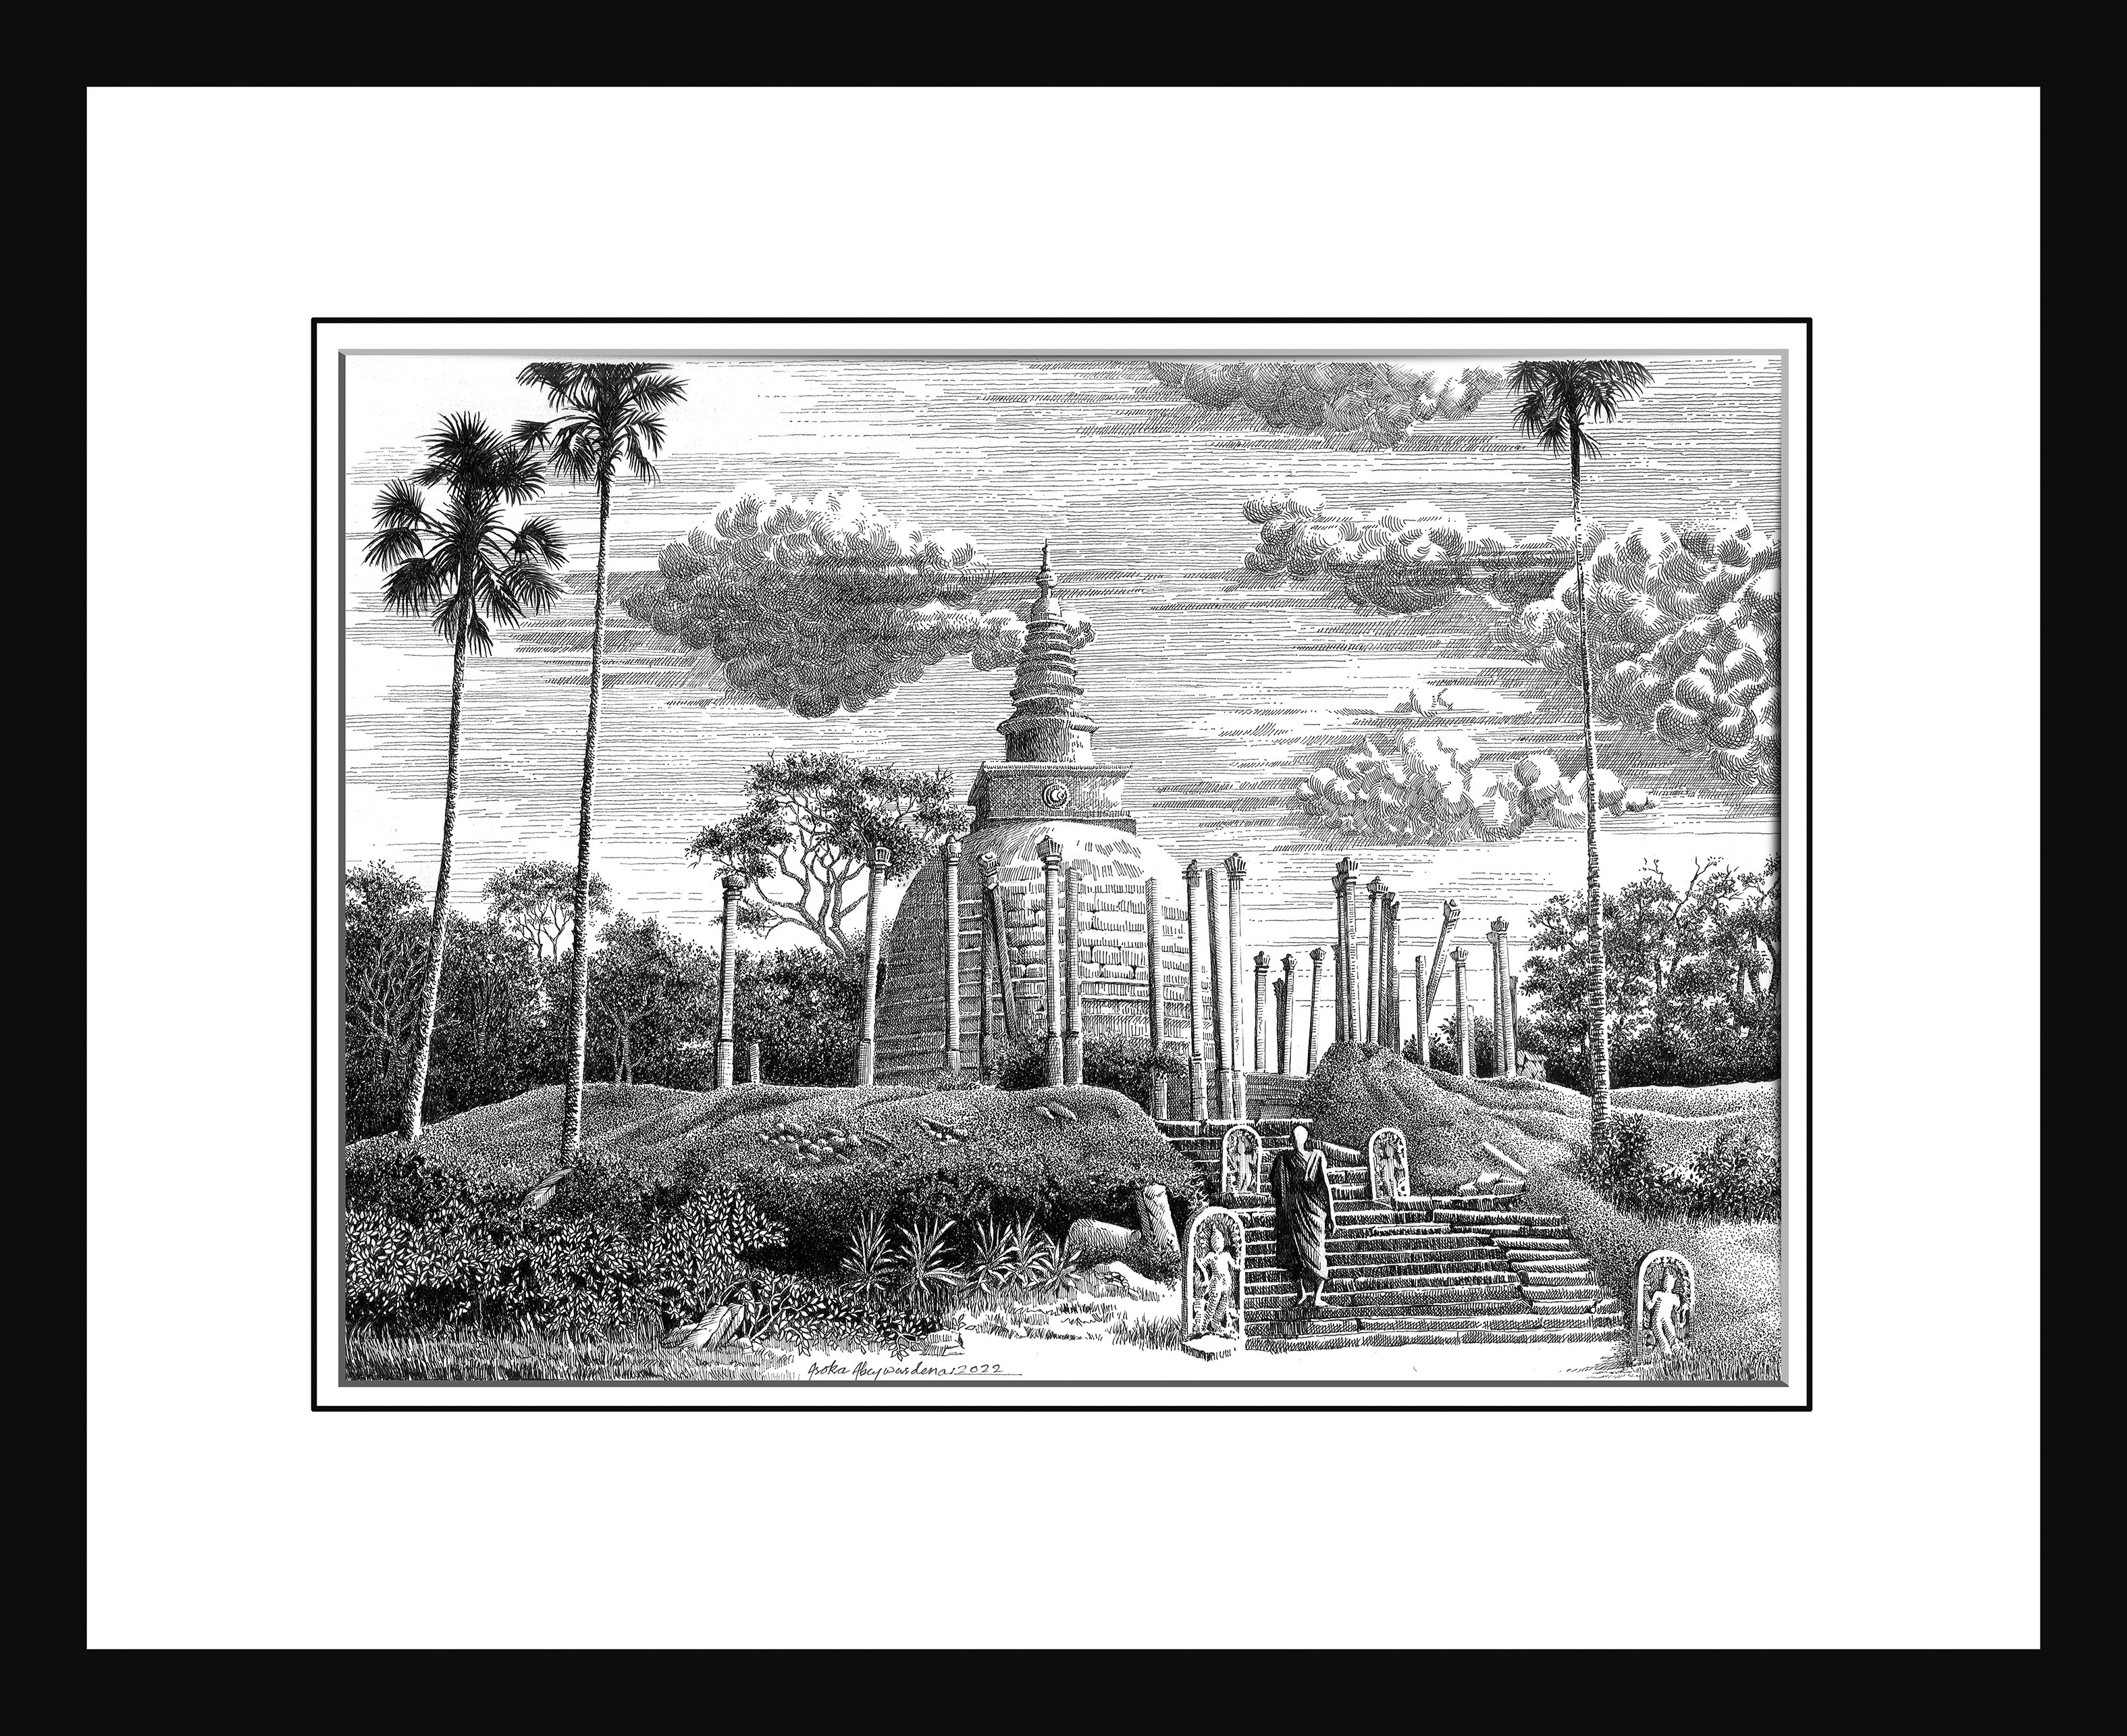 Thuparamaya In Ceylon 1800 by ASOKA ABEYWARDENA